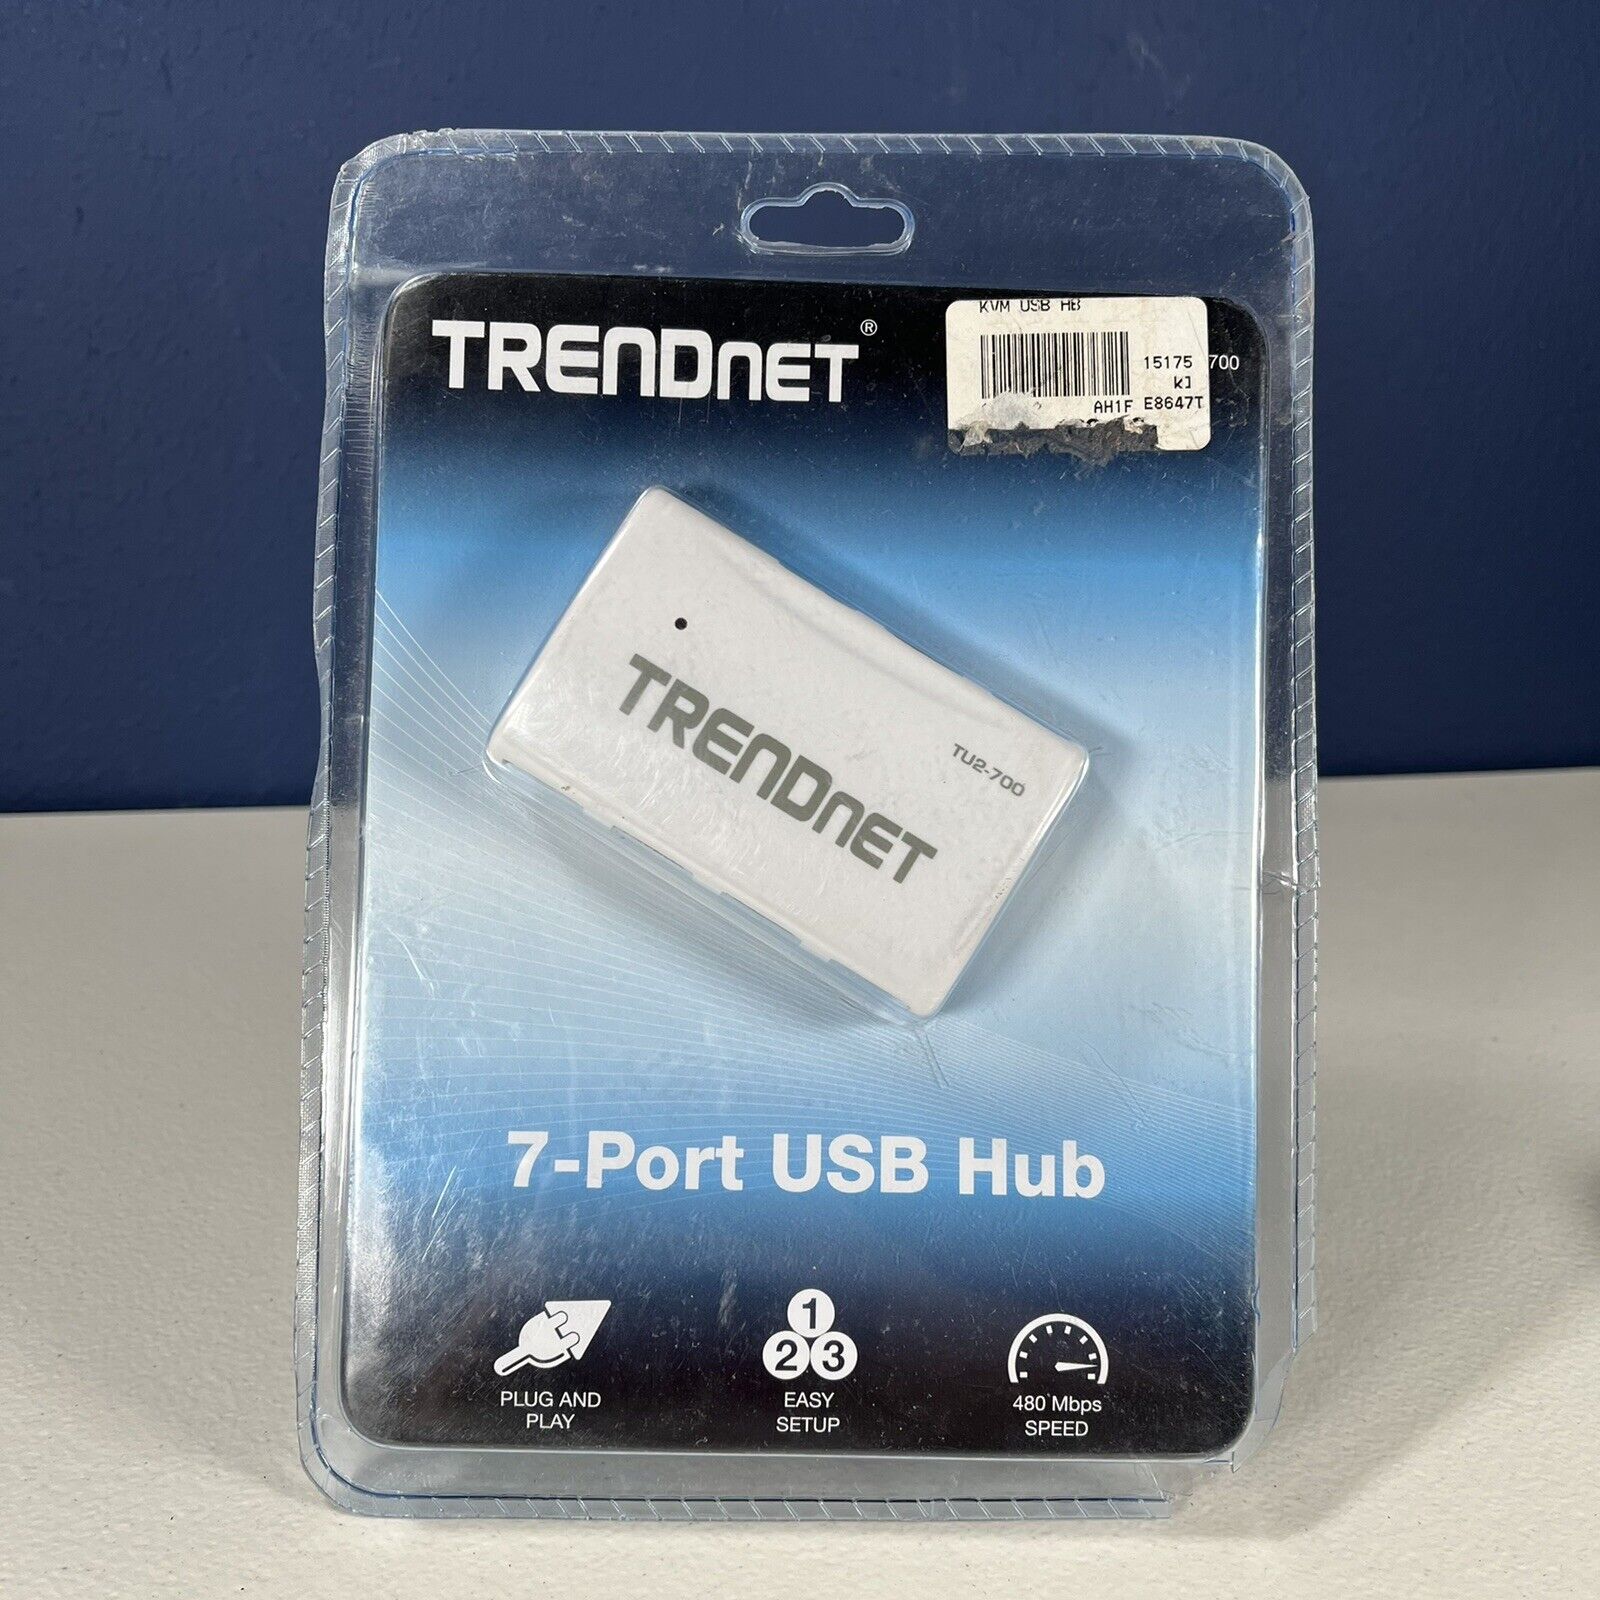 TRENDnet TU2-700 High Speed USB 2.0 7-port Hub /w Power adapter